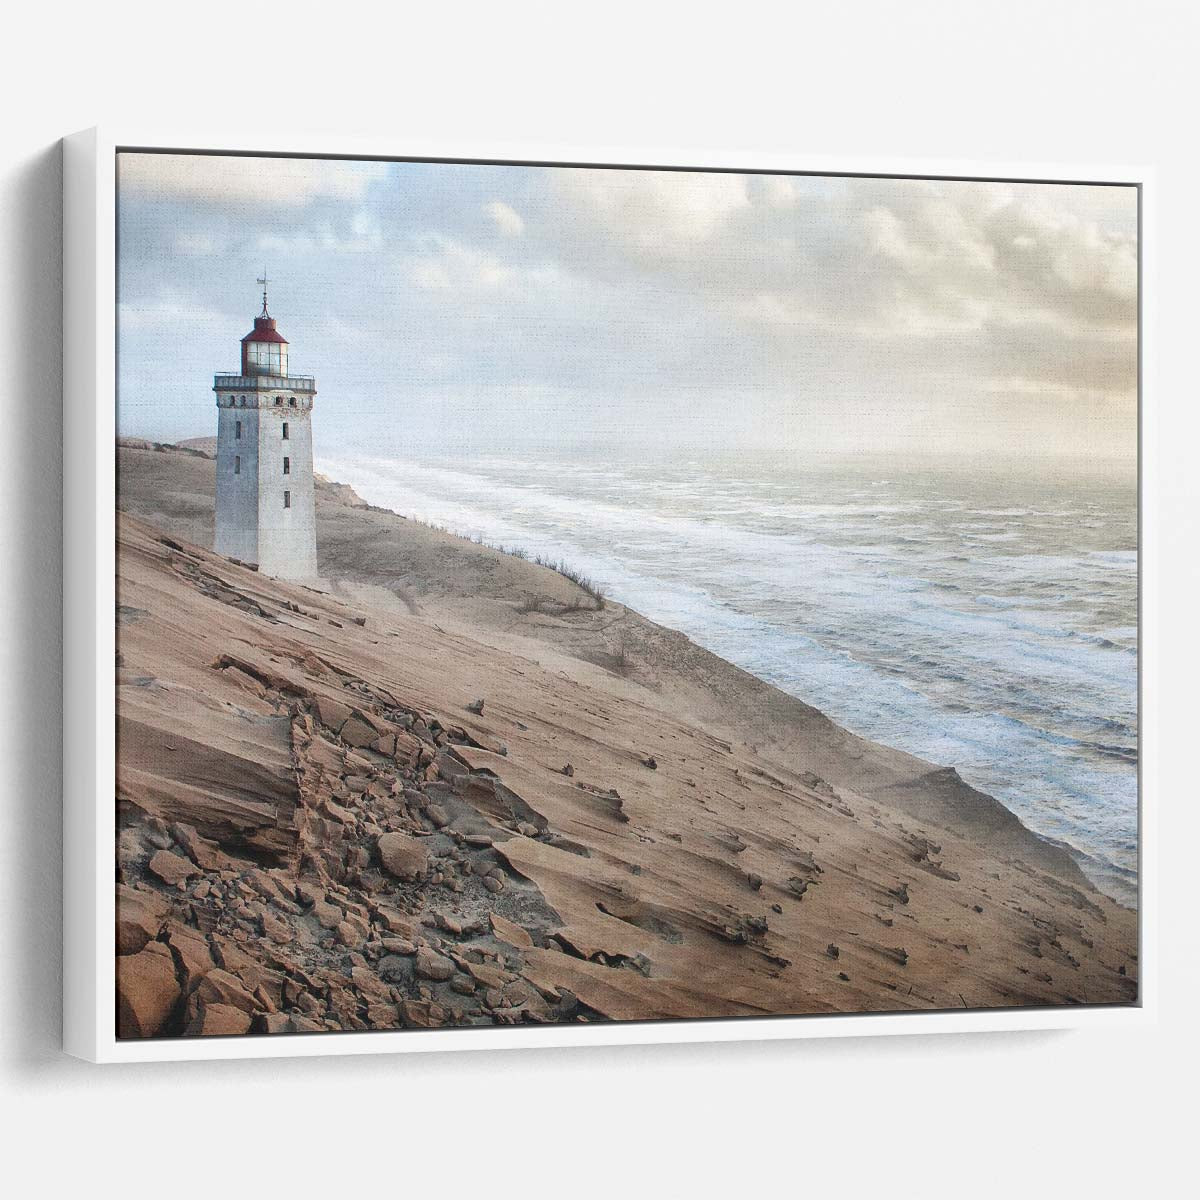 Rubjerg Knude Lighthouse Denmark Coastal Seascape Wall Art by Luxuriance Designs. Made in USA.